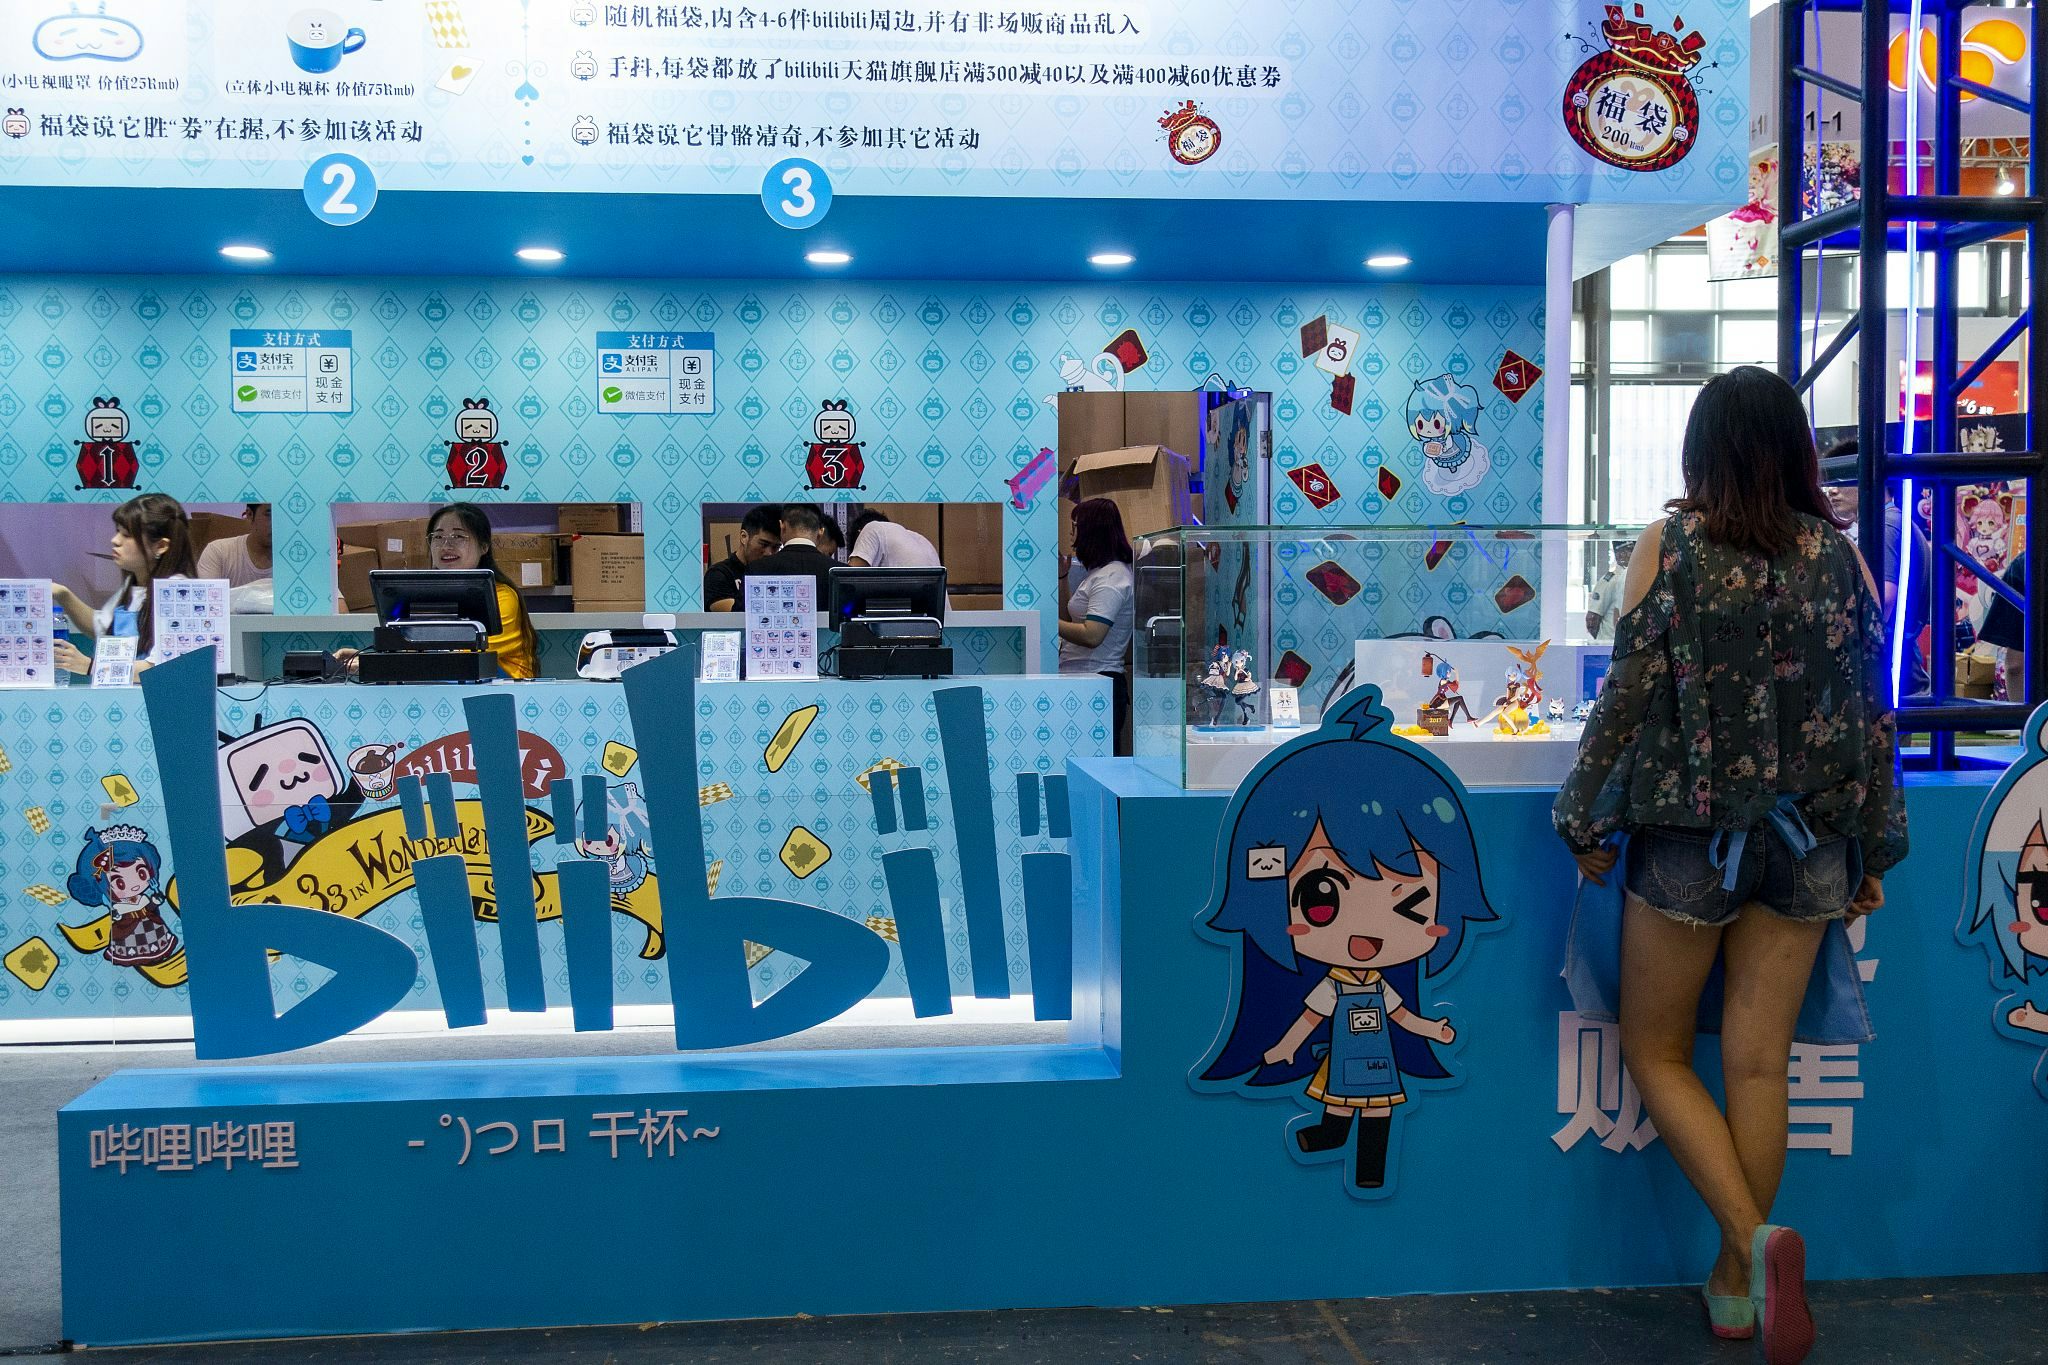 Bilibili and Taobao Partner on E-Commerce